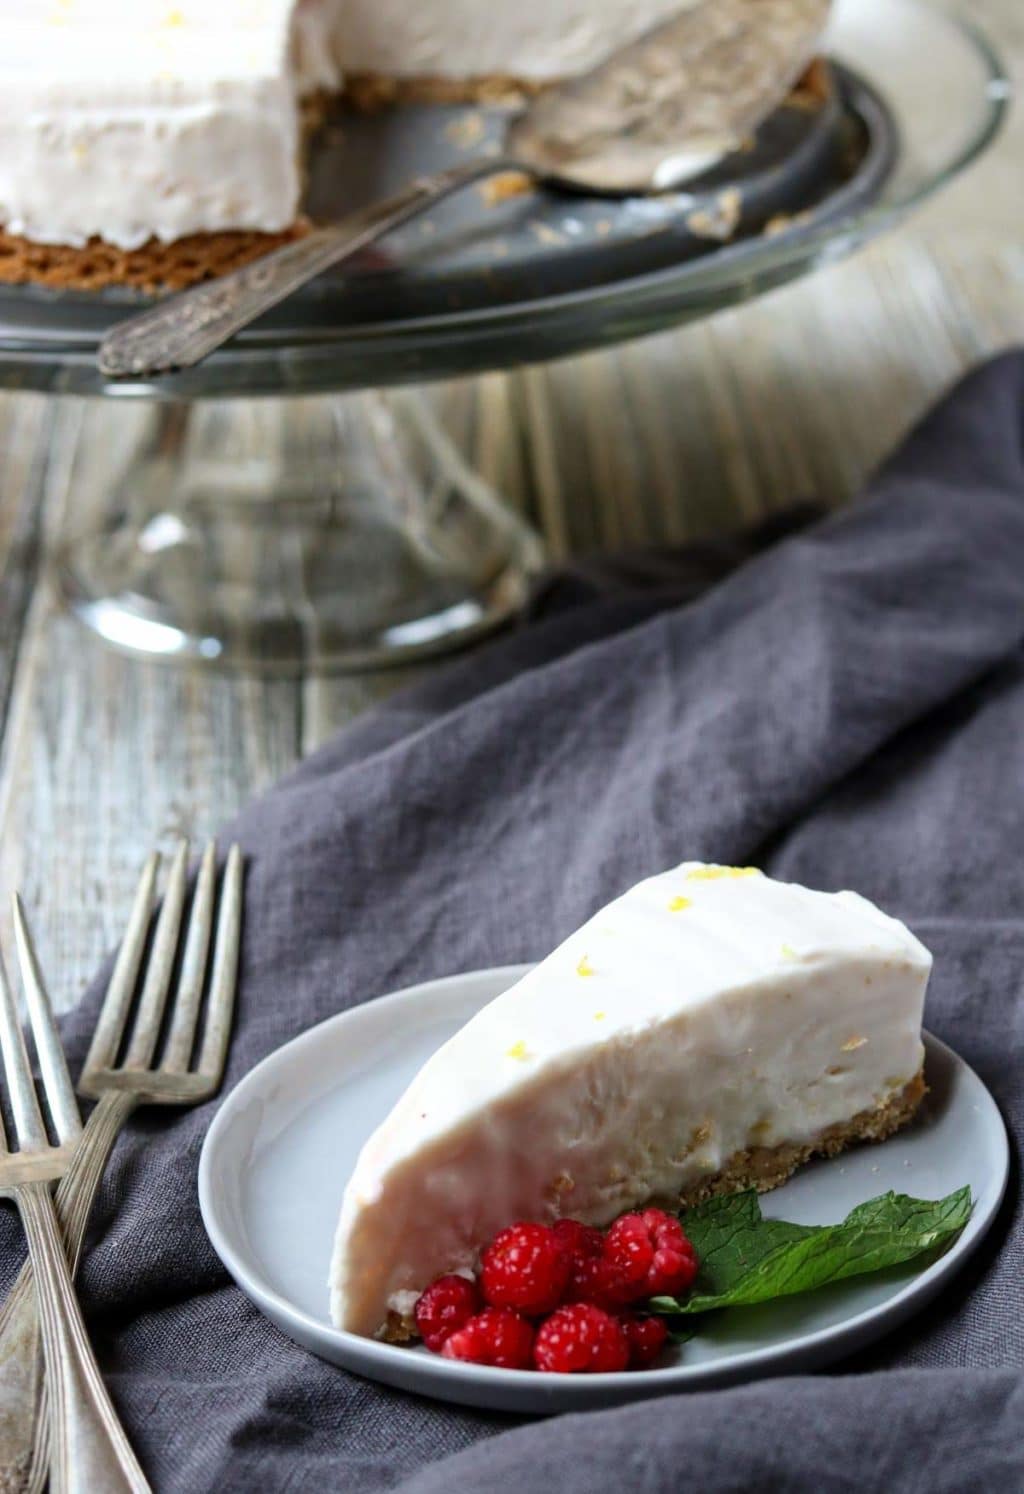 A slice of Raspberry Lemonade Icebox Pie garnished with fresh raspberries and mint leaves